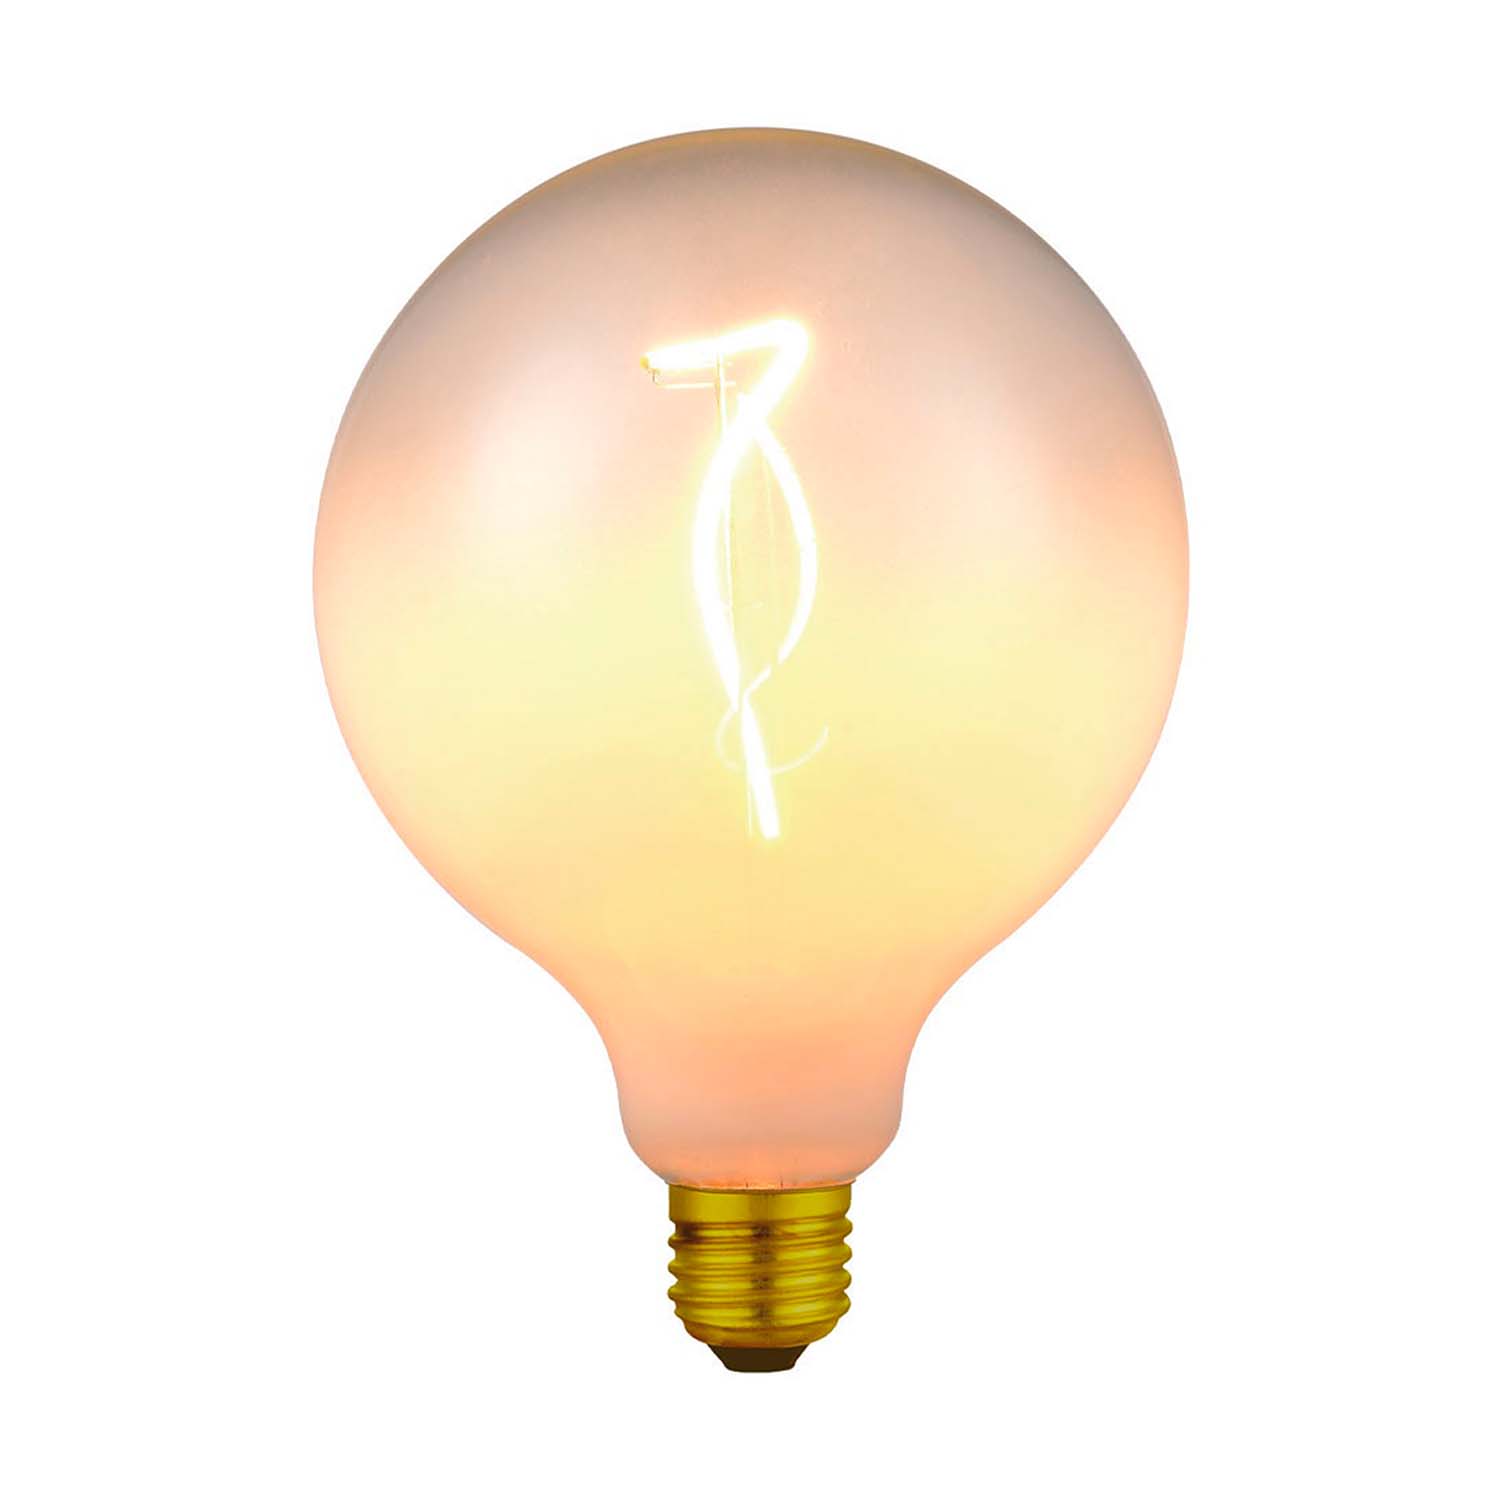 Soft - E27 LED bulb colorful gradient design